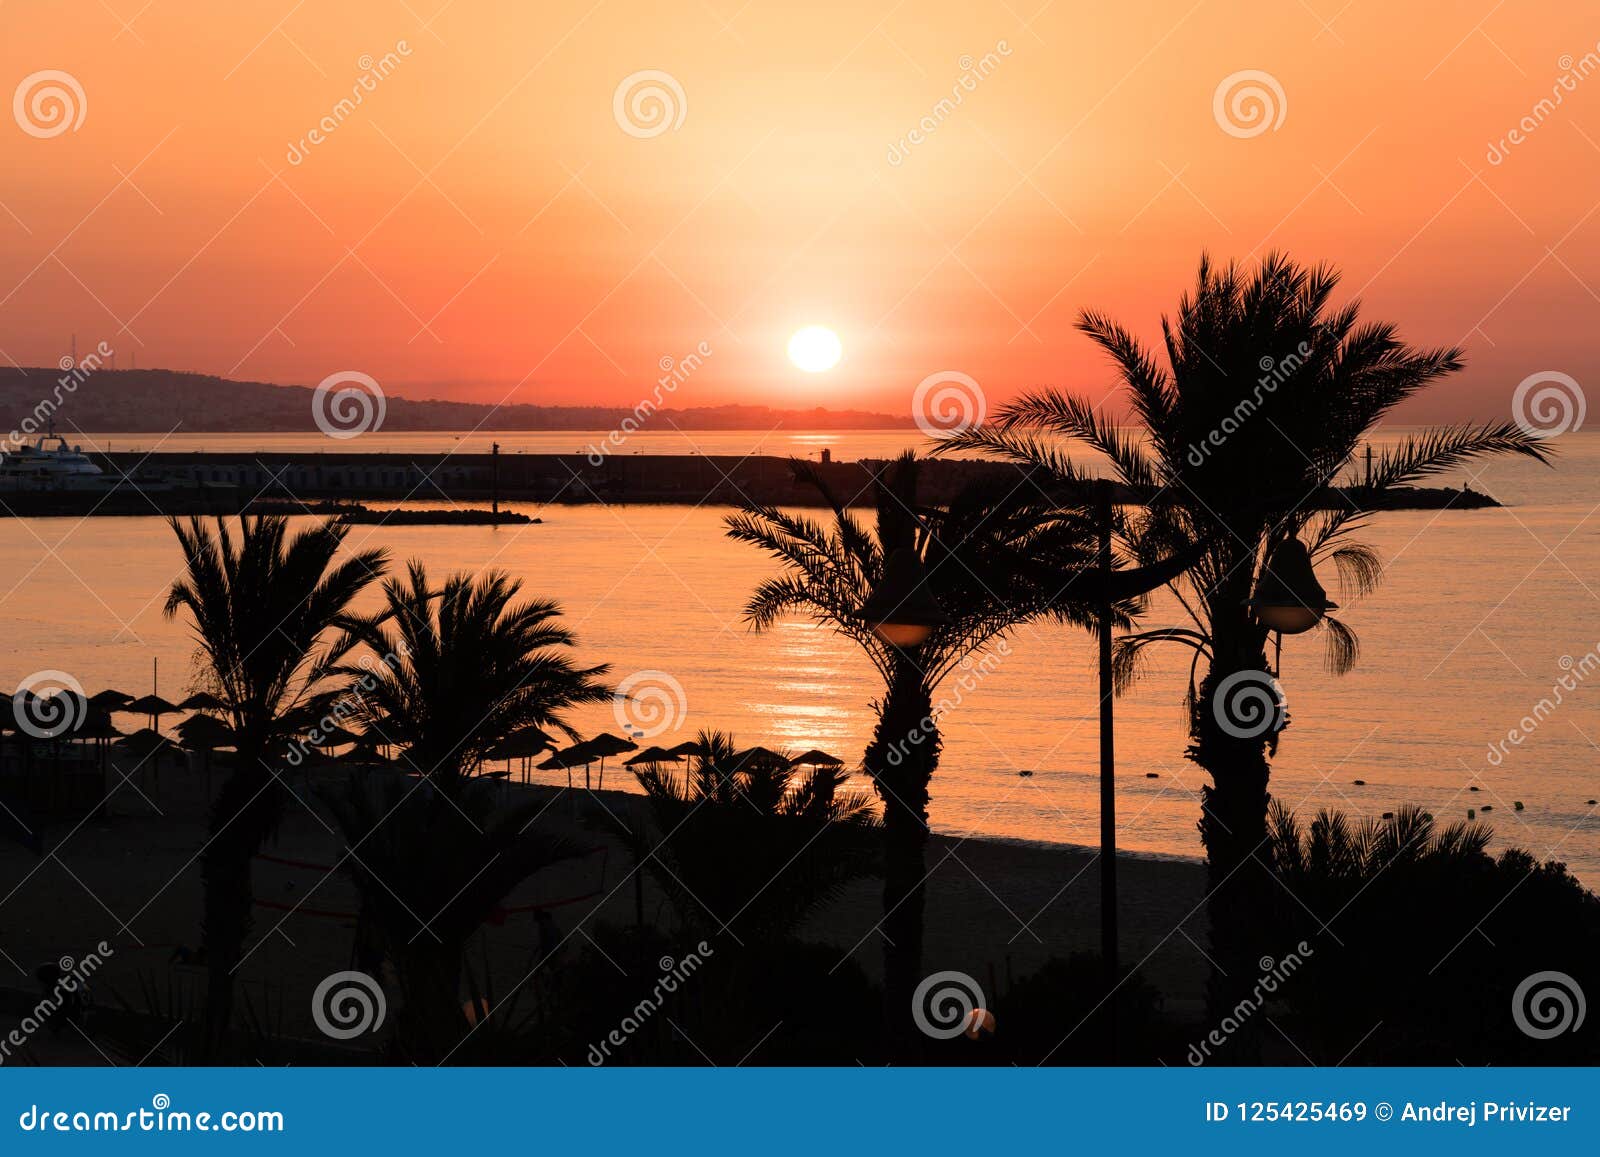 brilliant vacation destination beach sunrise, yasmine hammamet, tunisia, africa